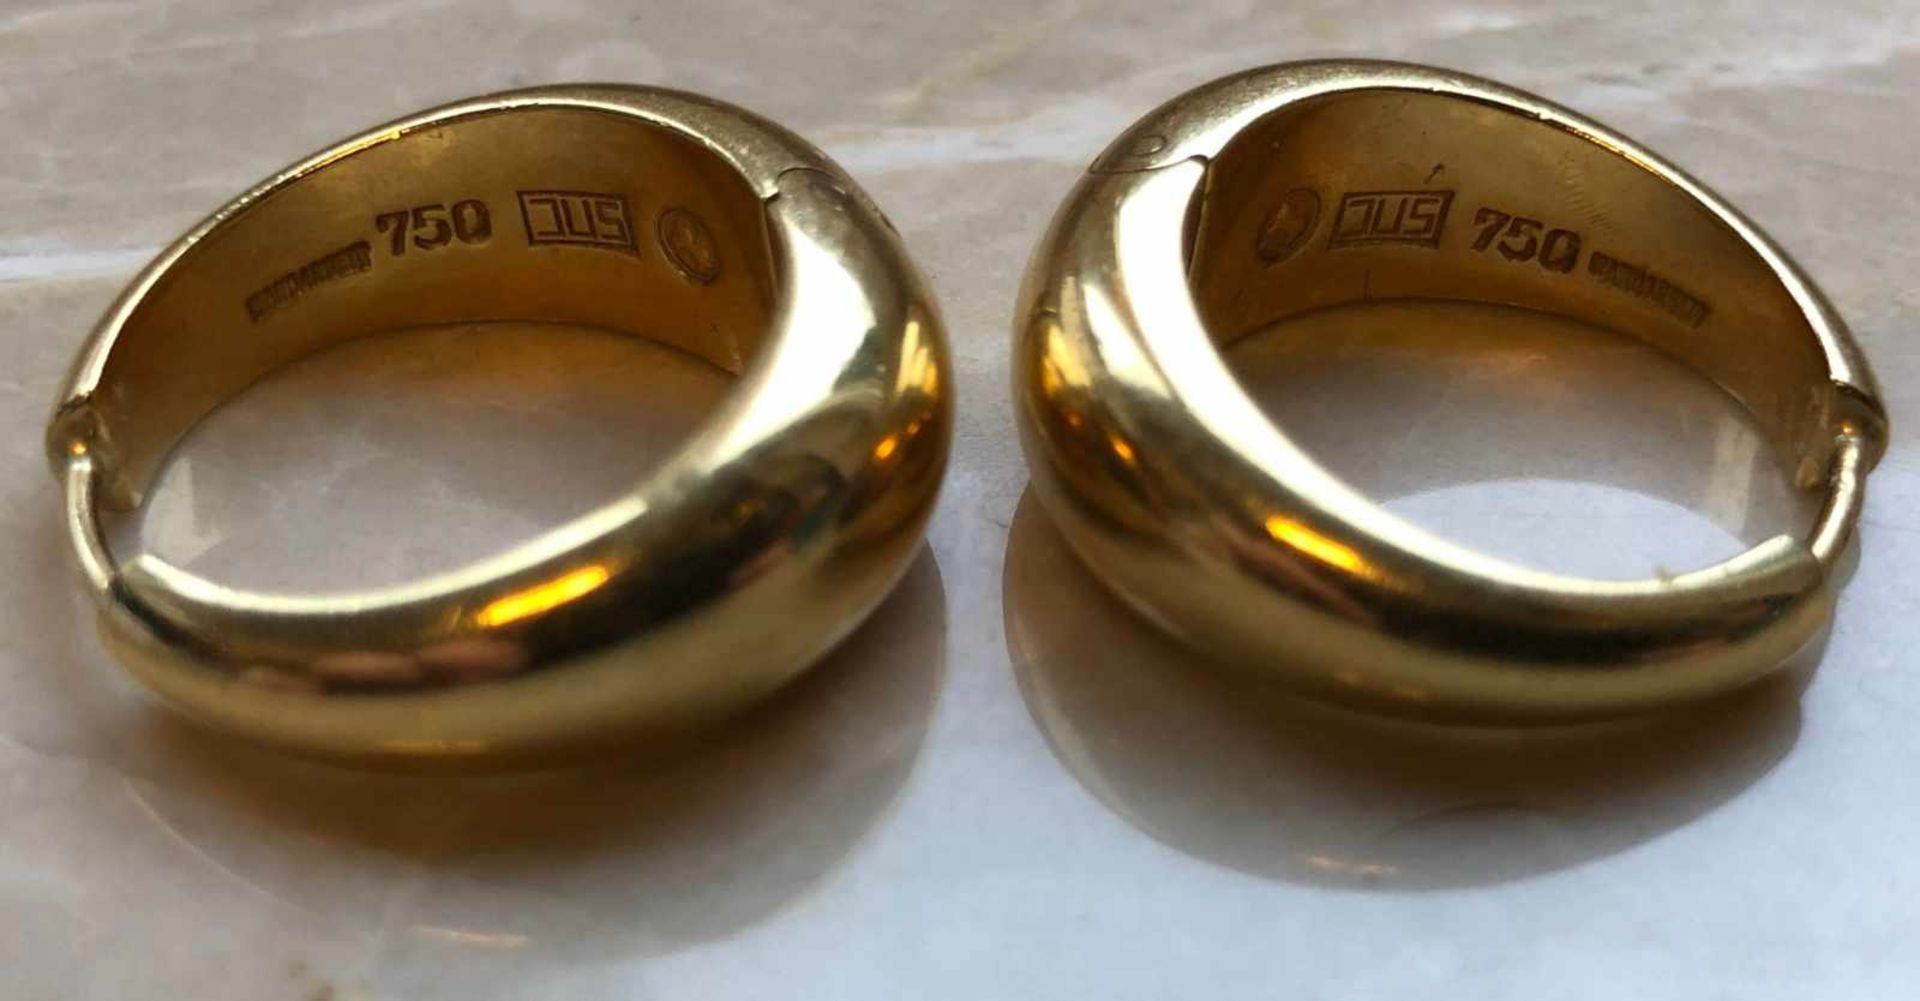 Paar Ohrringe Gold 750. Handarbeit. Marken.9,5 Gramm. 22 mm Durchmesser.Pair of earrings 750 gold. - Image 3 of 6